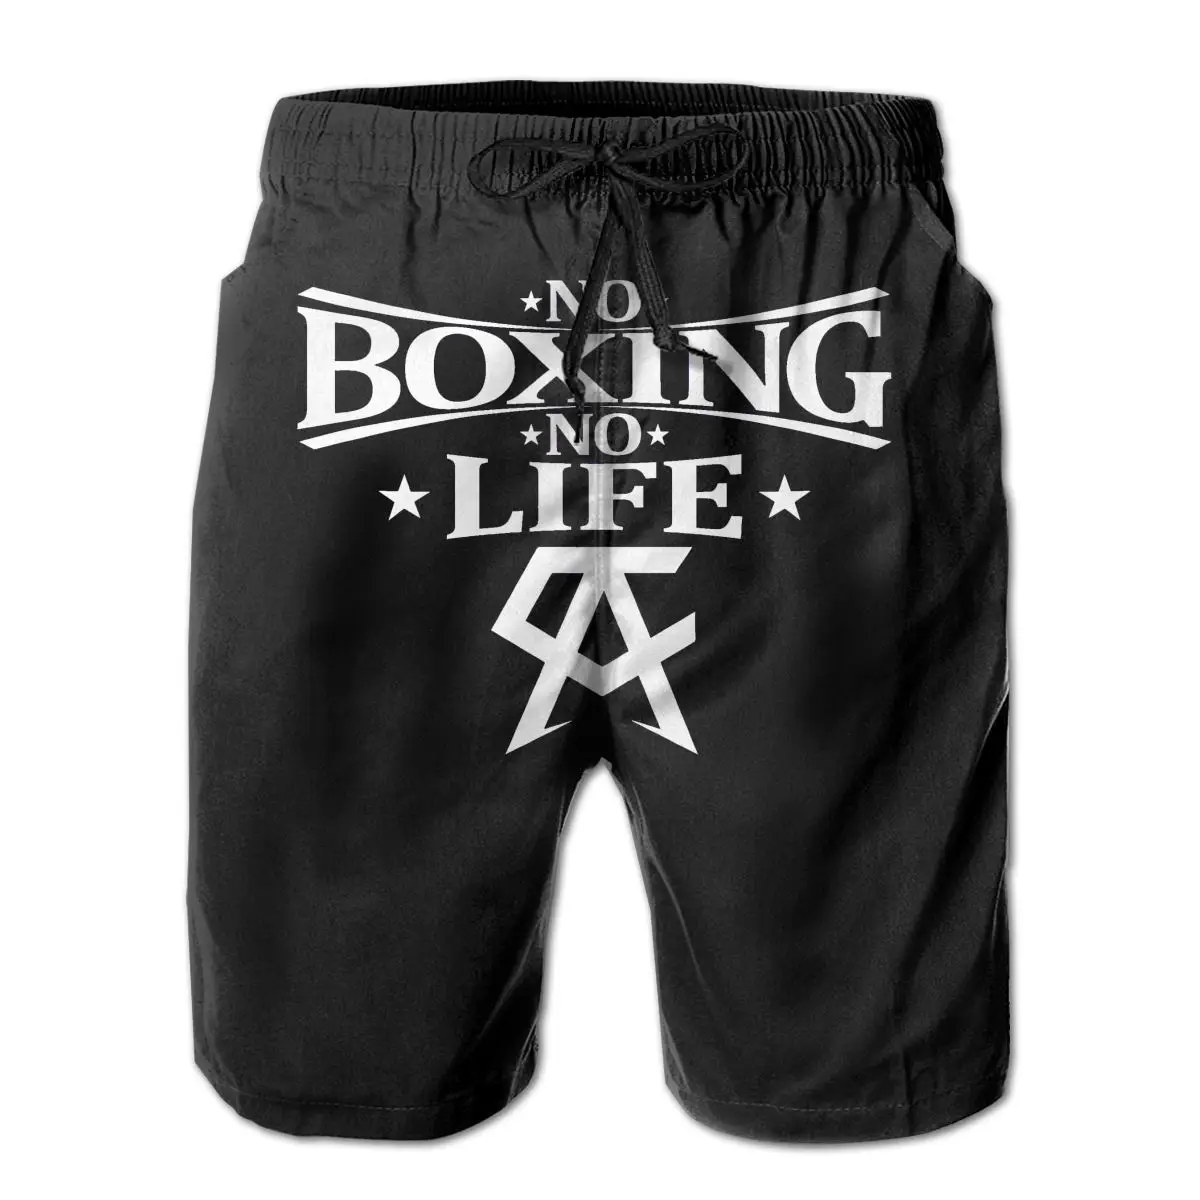 Promo Canelos Alvarez No Boxing No Life Essential 4 Anime Beach Breathable Quick Dry Cute print R257 basketball Hawaii Pants